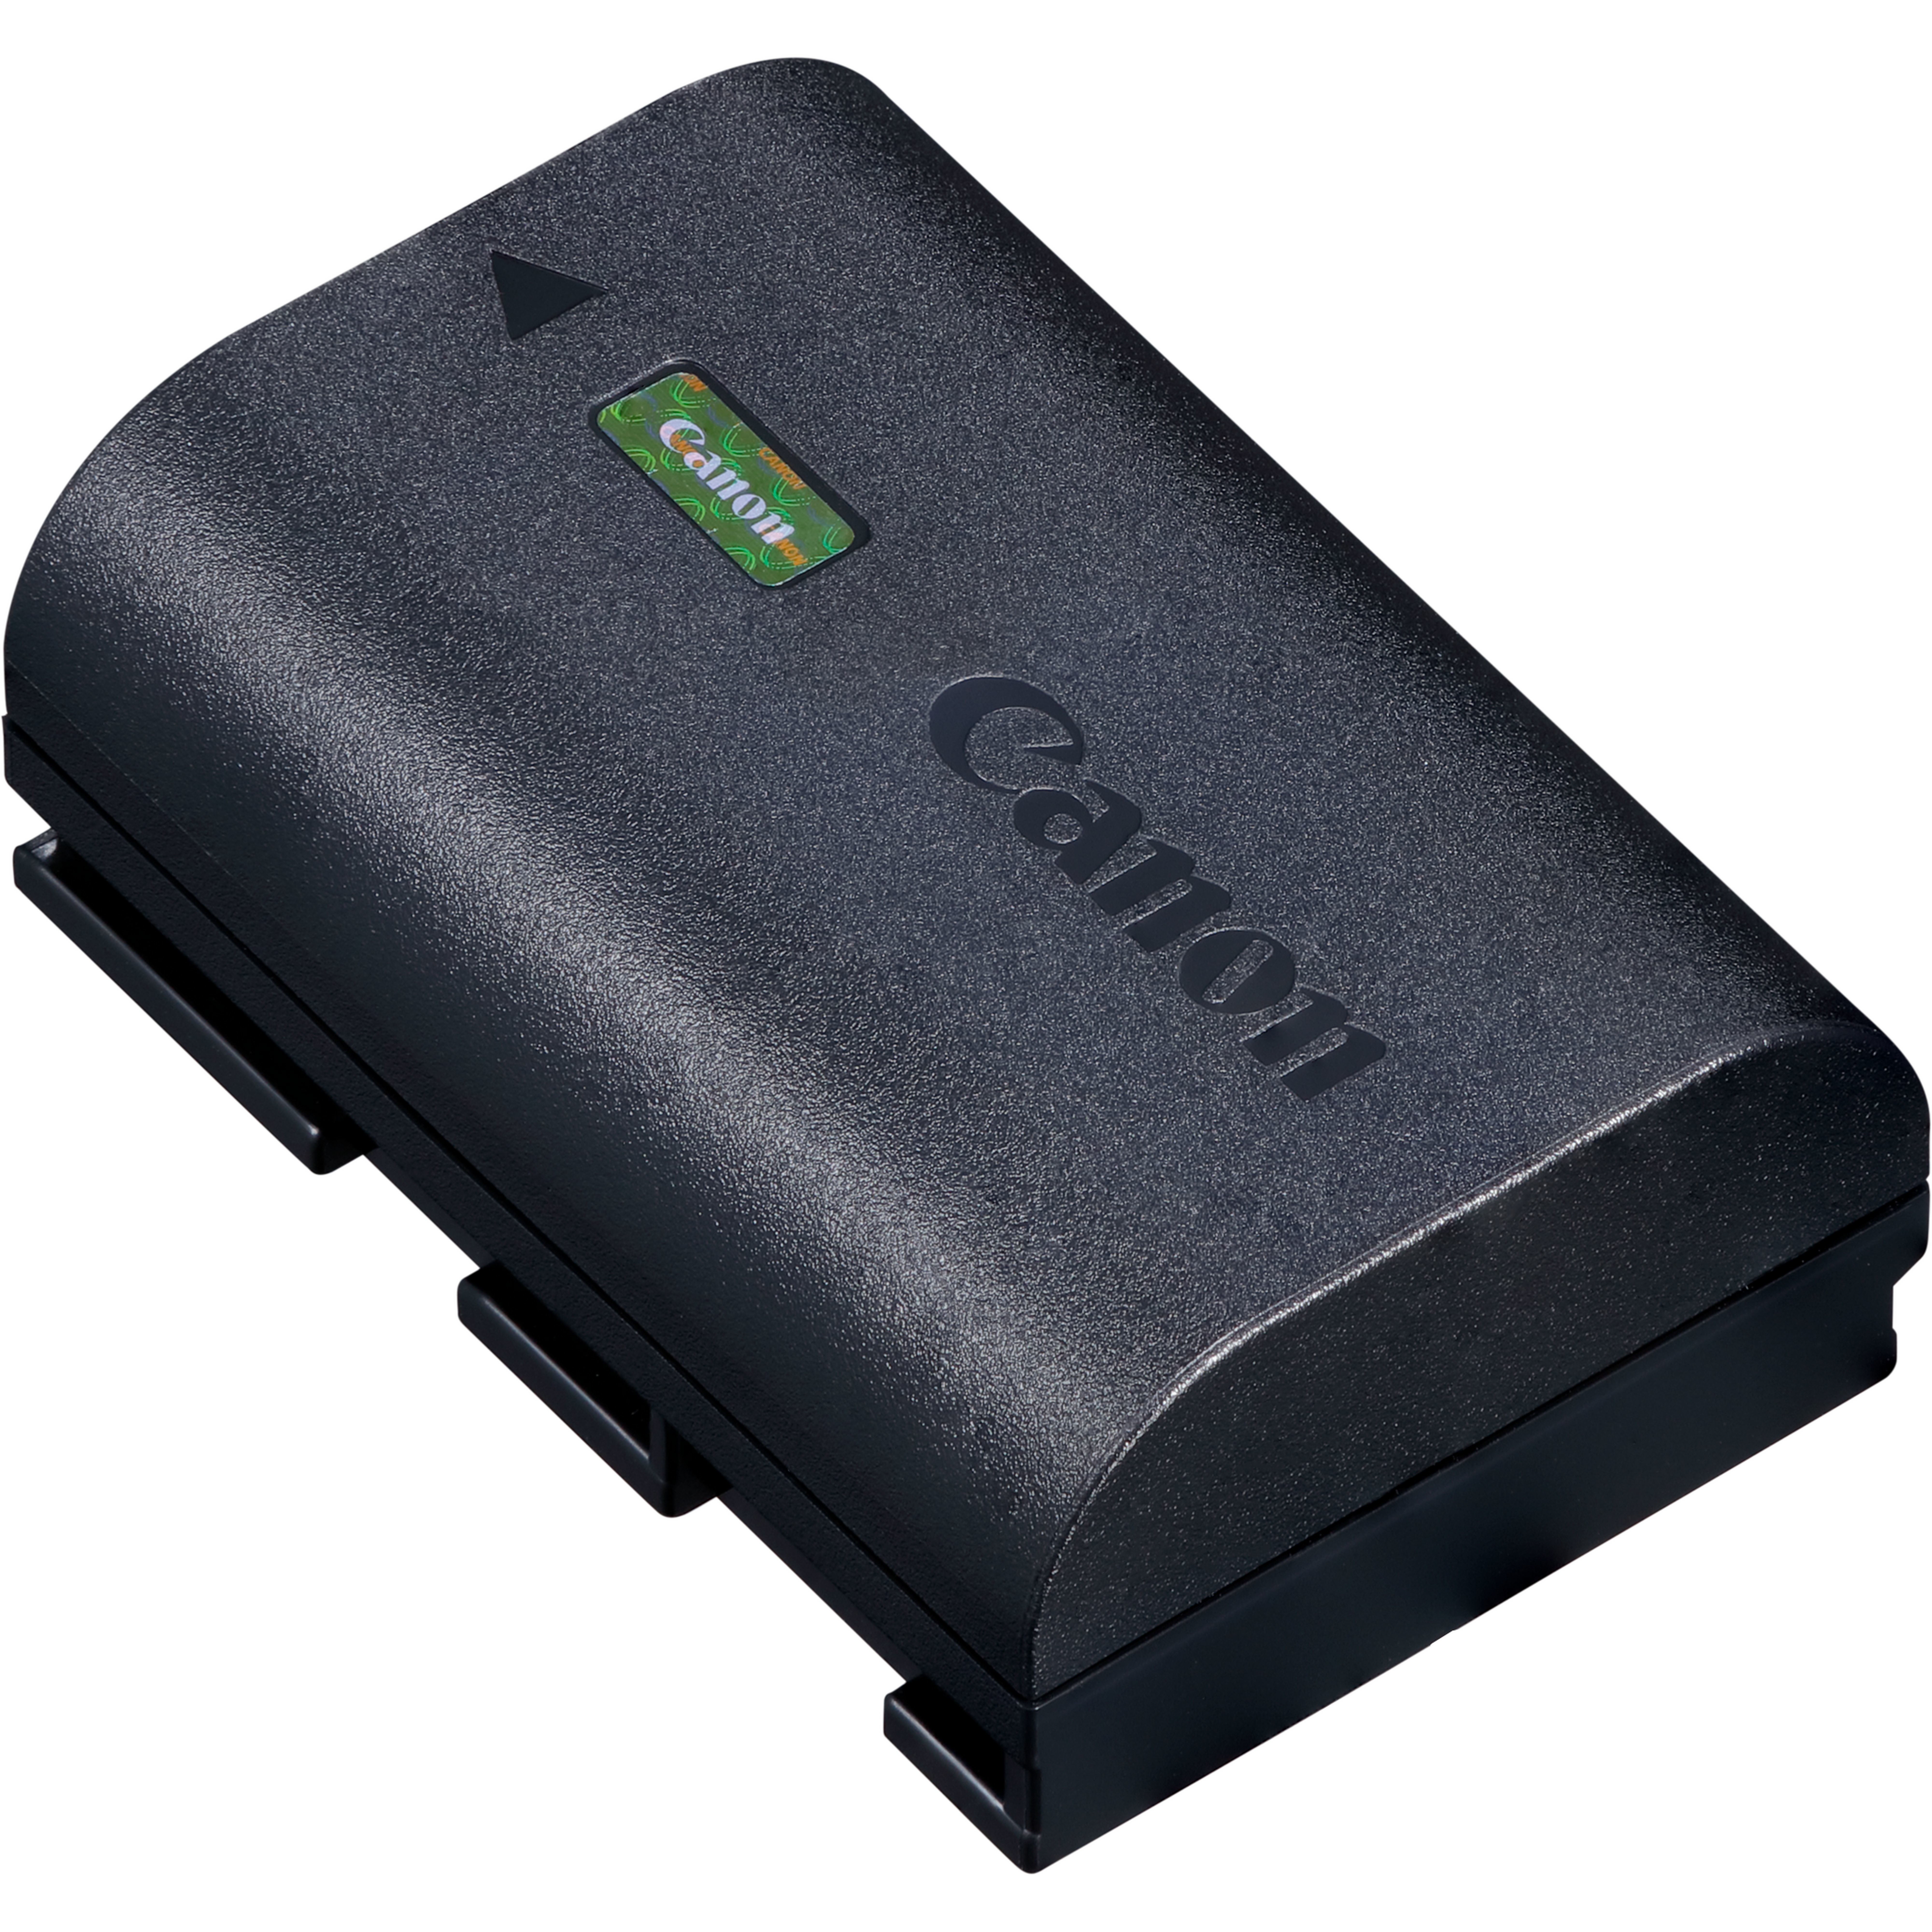 Canon 4132C002 batteri till kamera/videokamera Litium-Ion (Li-Ion) 2130 mAh